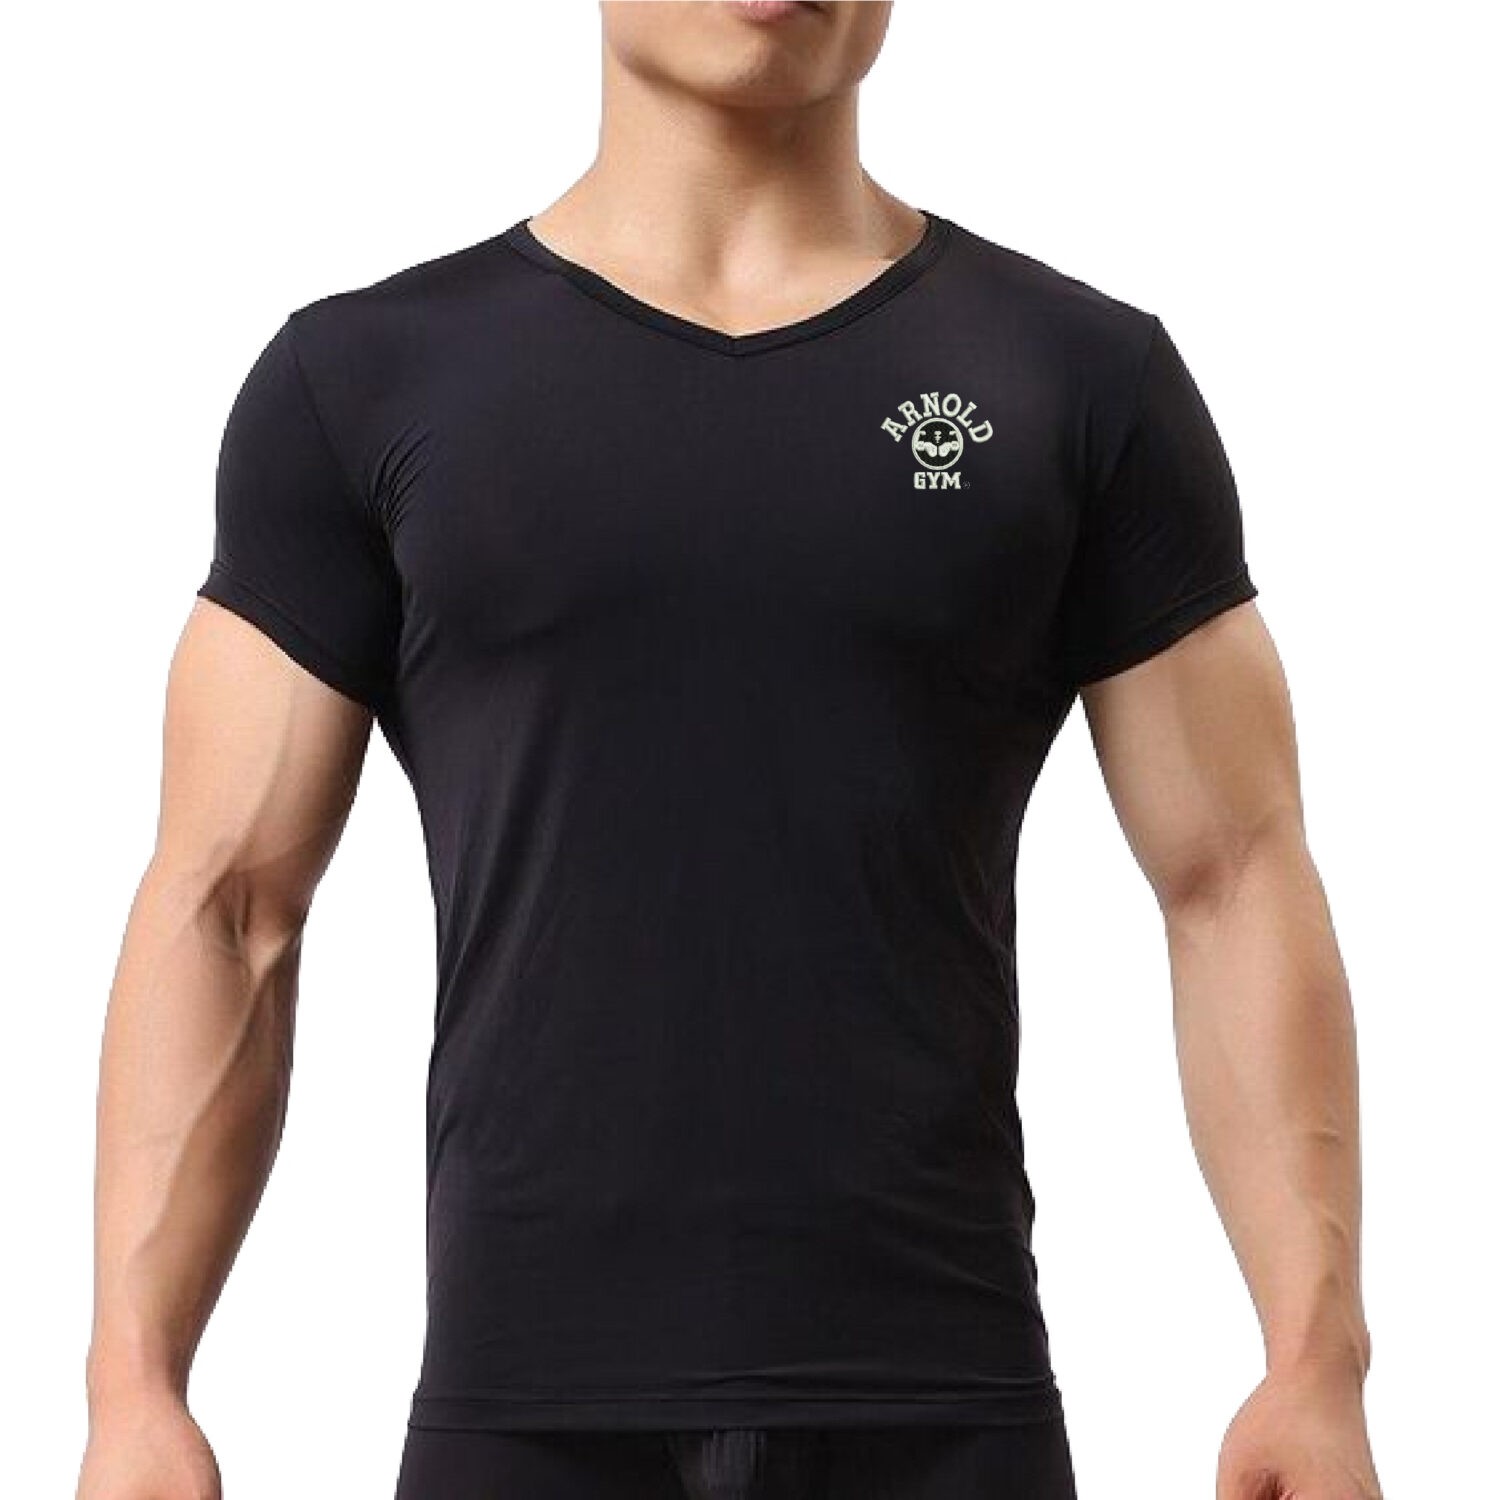 https://www.arnoldgymgear.com/wp-content/uploads/2021/09/arnold-gym-v-neck-top-black-gym-t-shirt.jpg